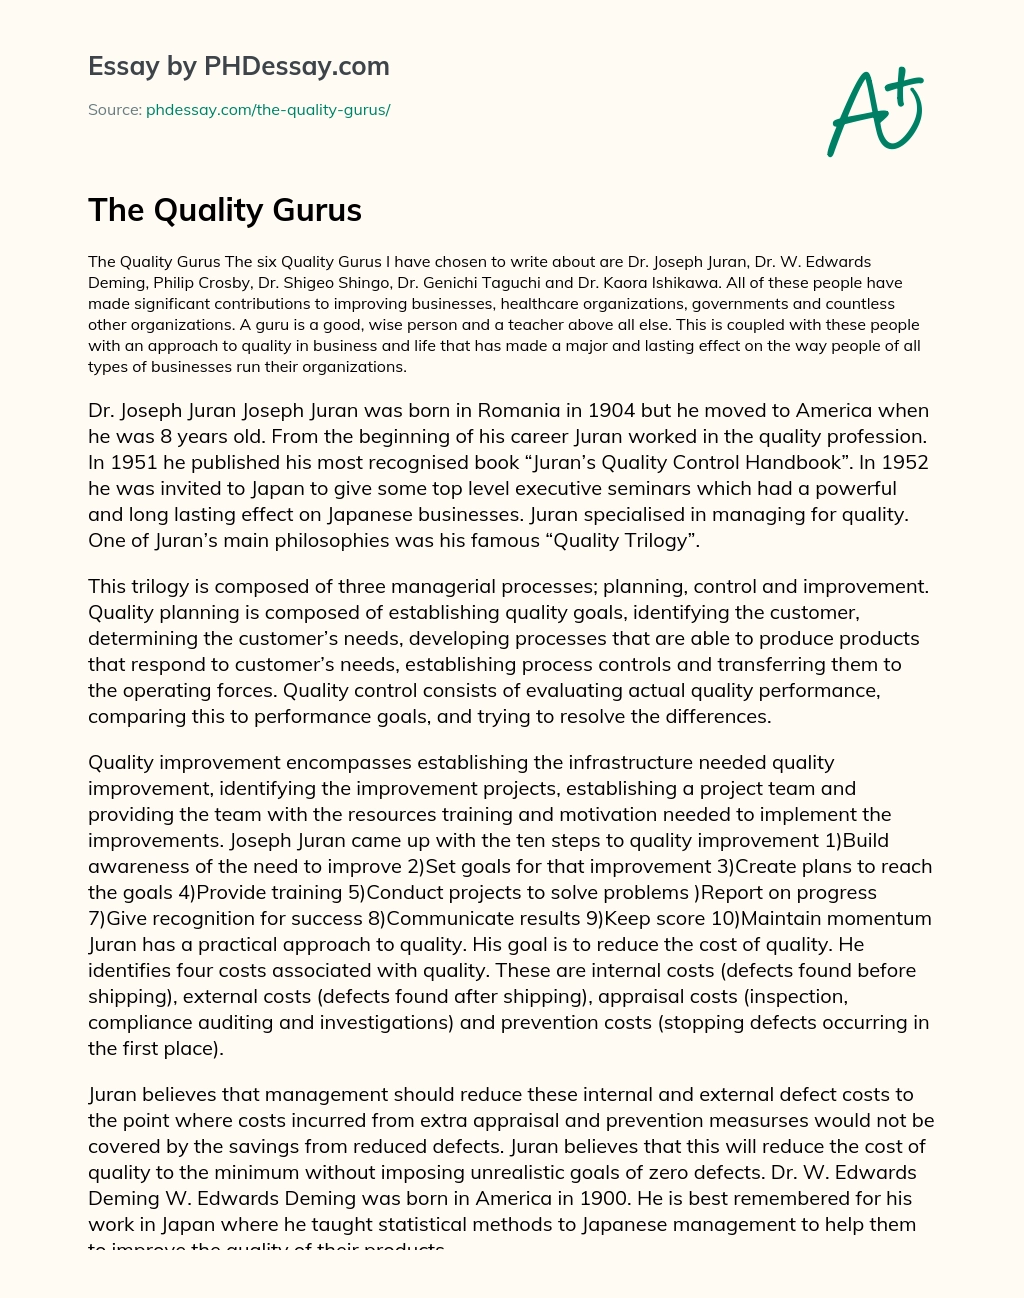 The Quality Gurus essay